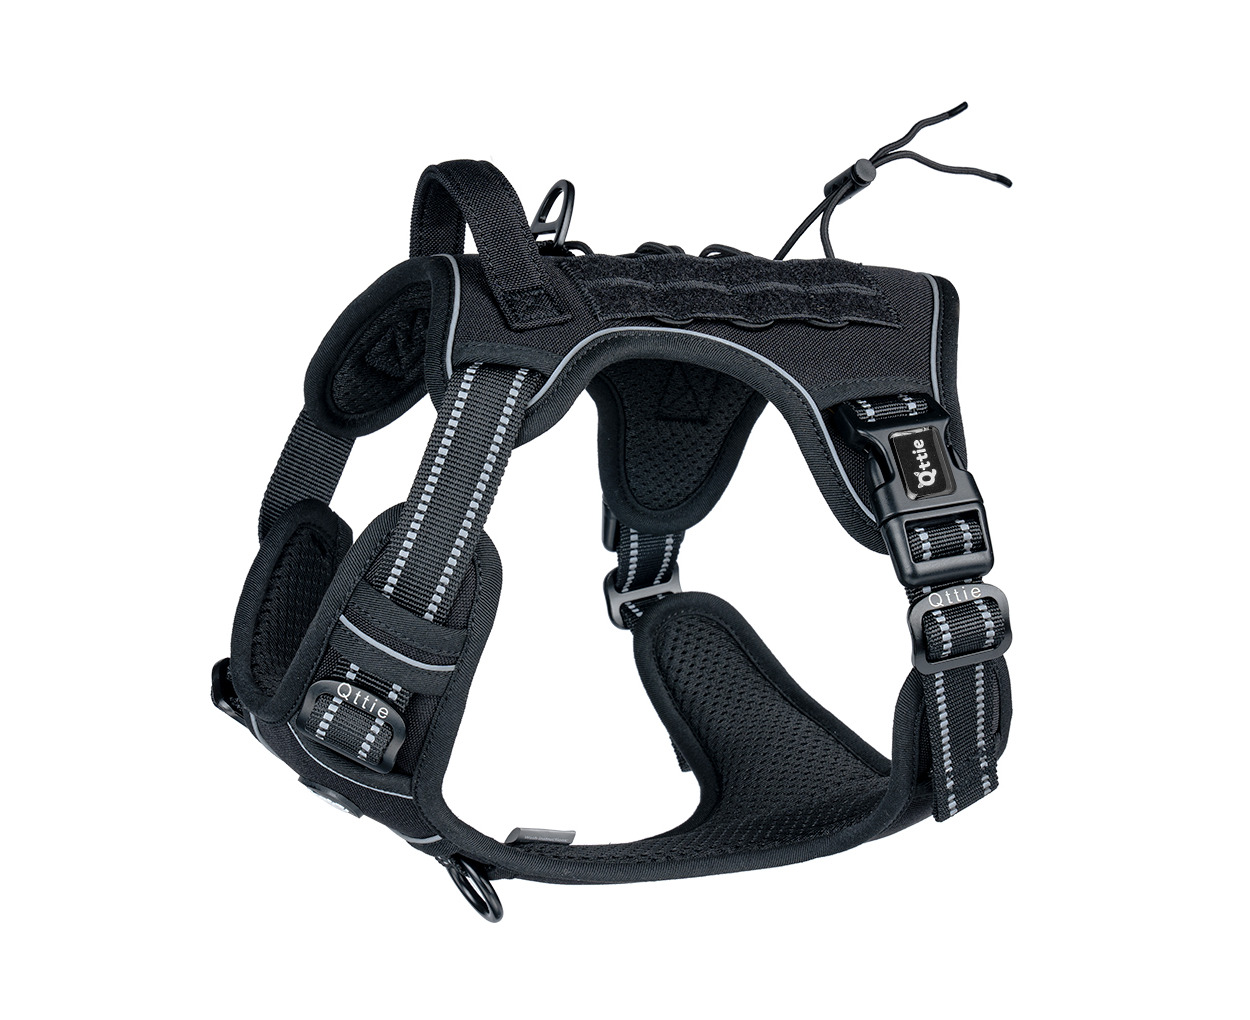 Heavy-Duty Tactical No-Pull Dog Harness